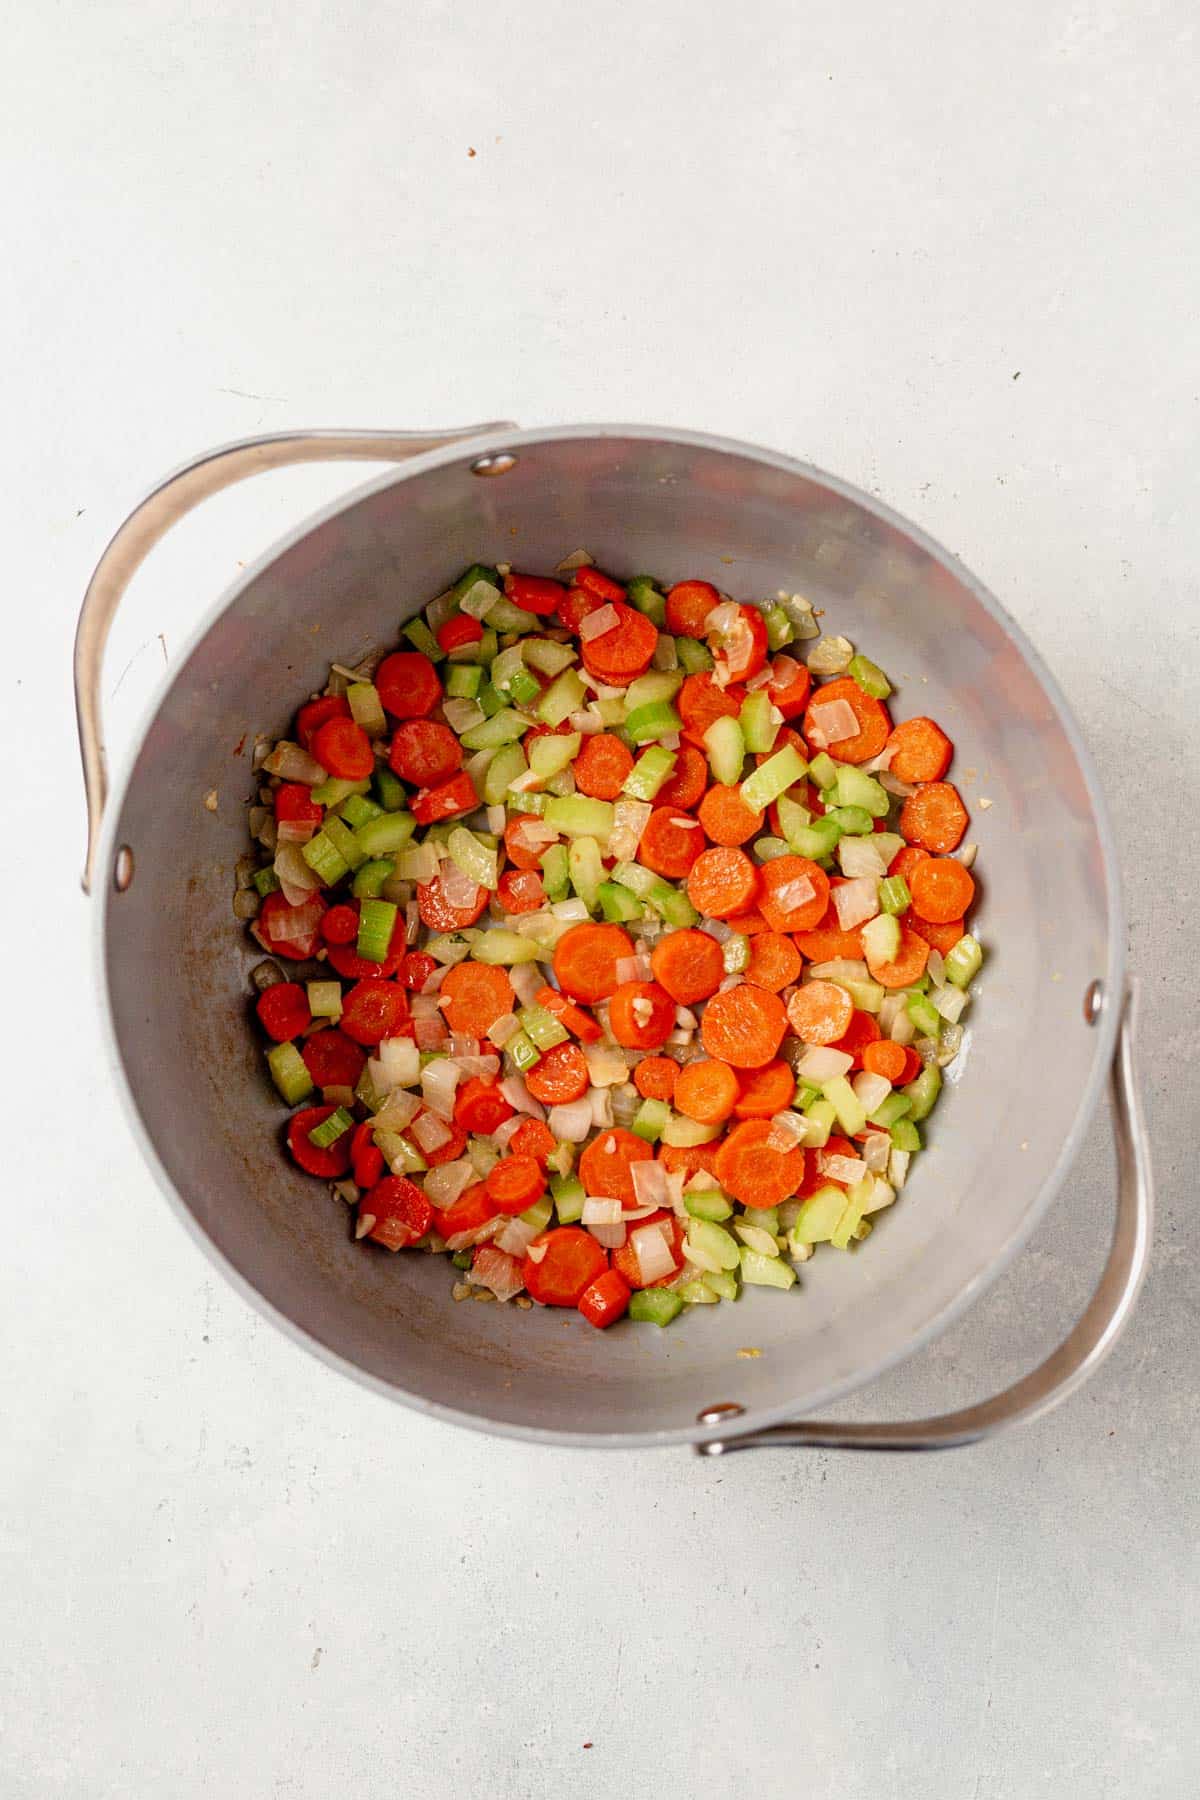 sauted veggies in a stock pot